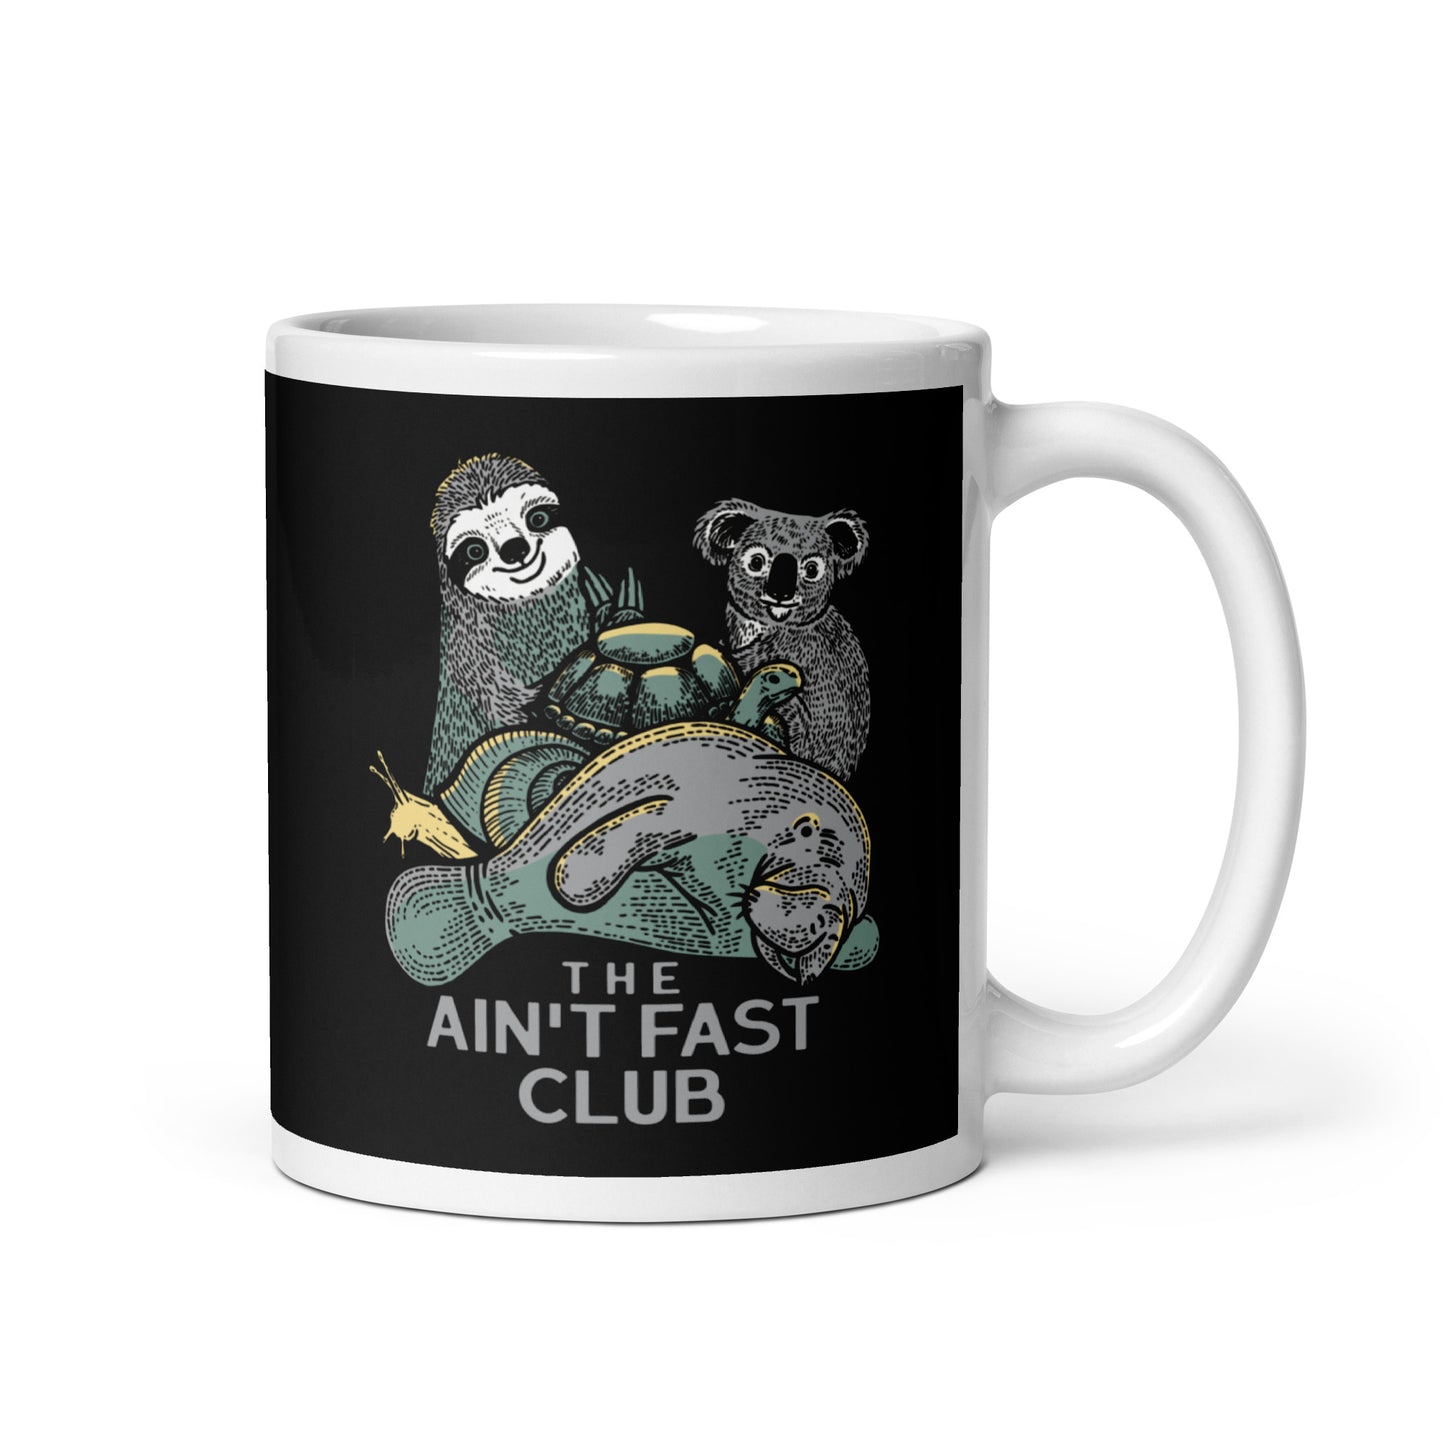 The Ain't Fast Club Mug